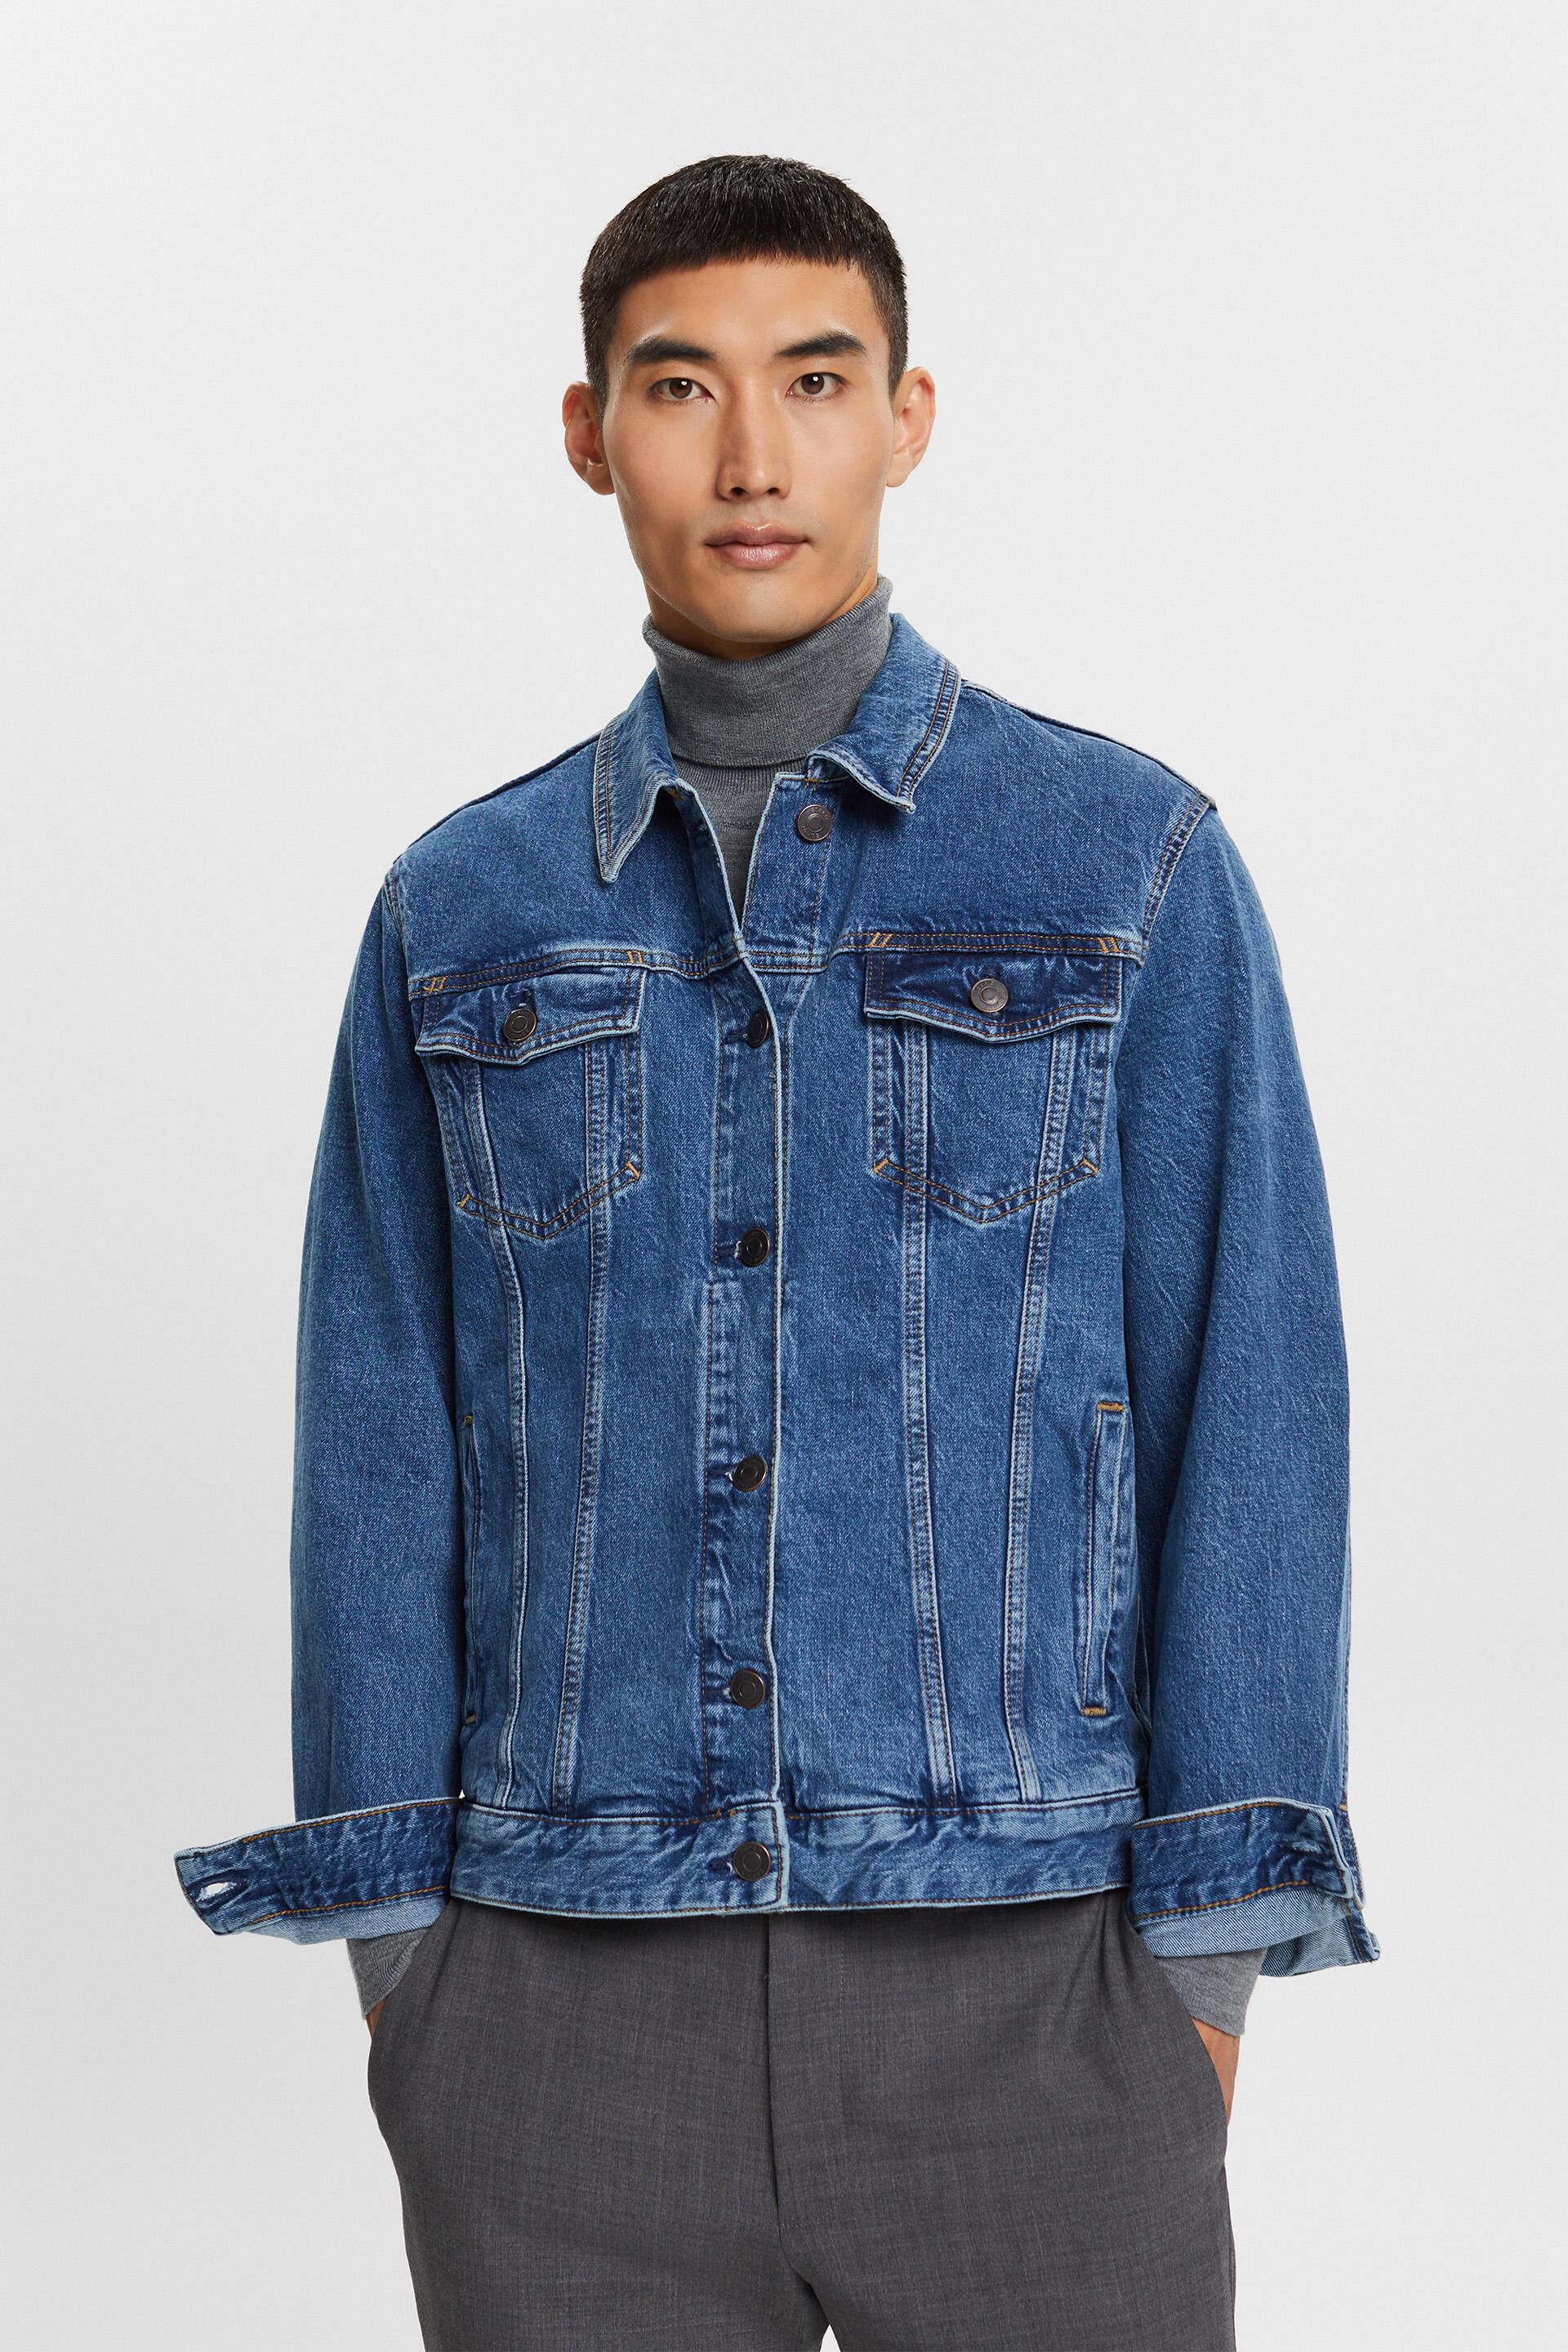 ESPRIT - Jeans trucker jacket at our online shop